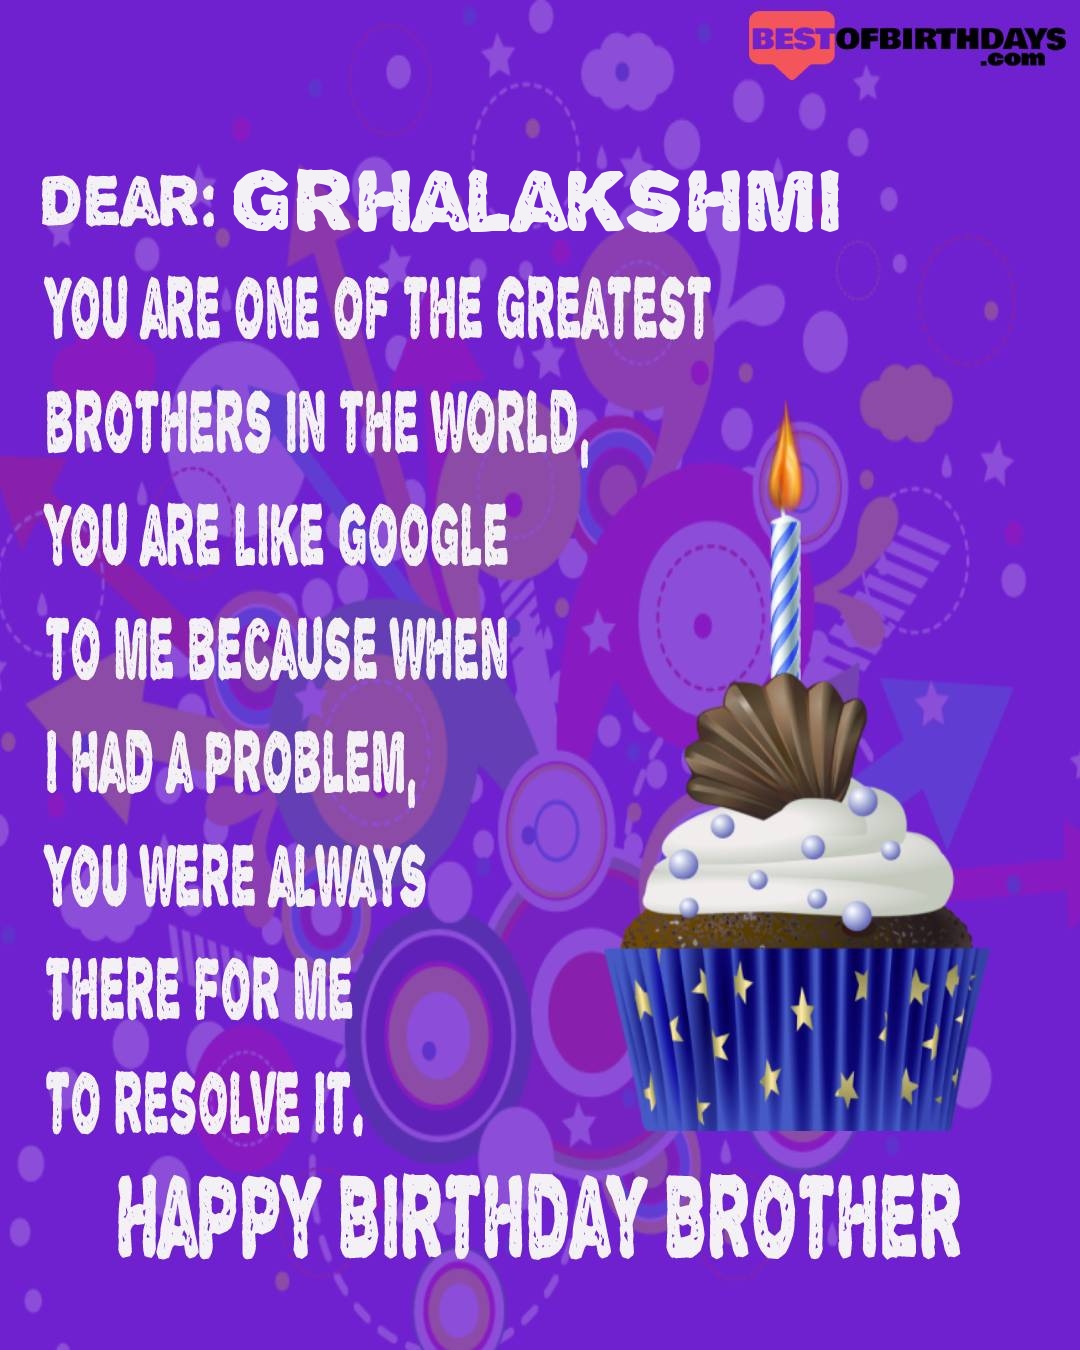 Happy birthday grhalakshmi bhai brother bro